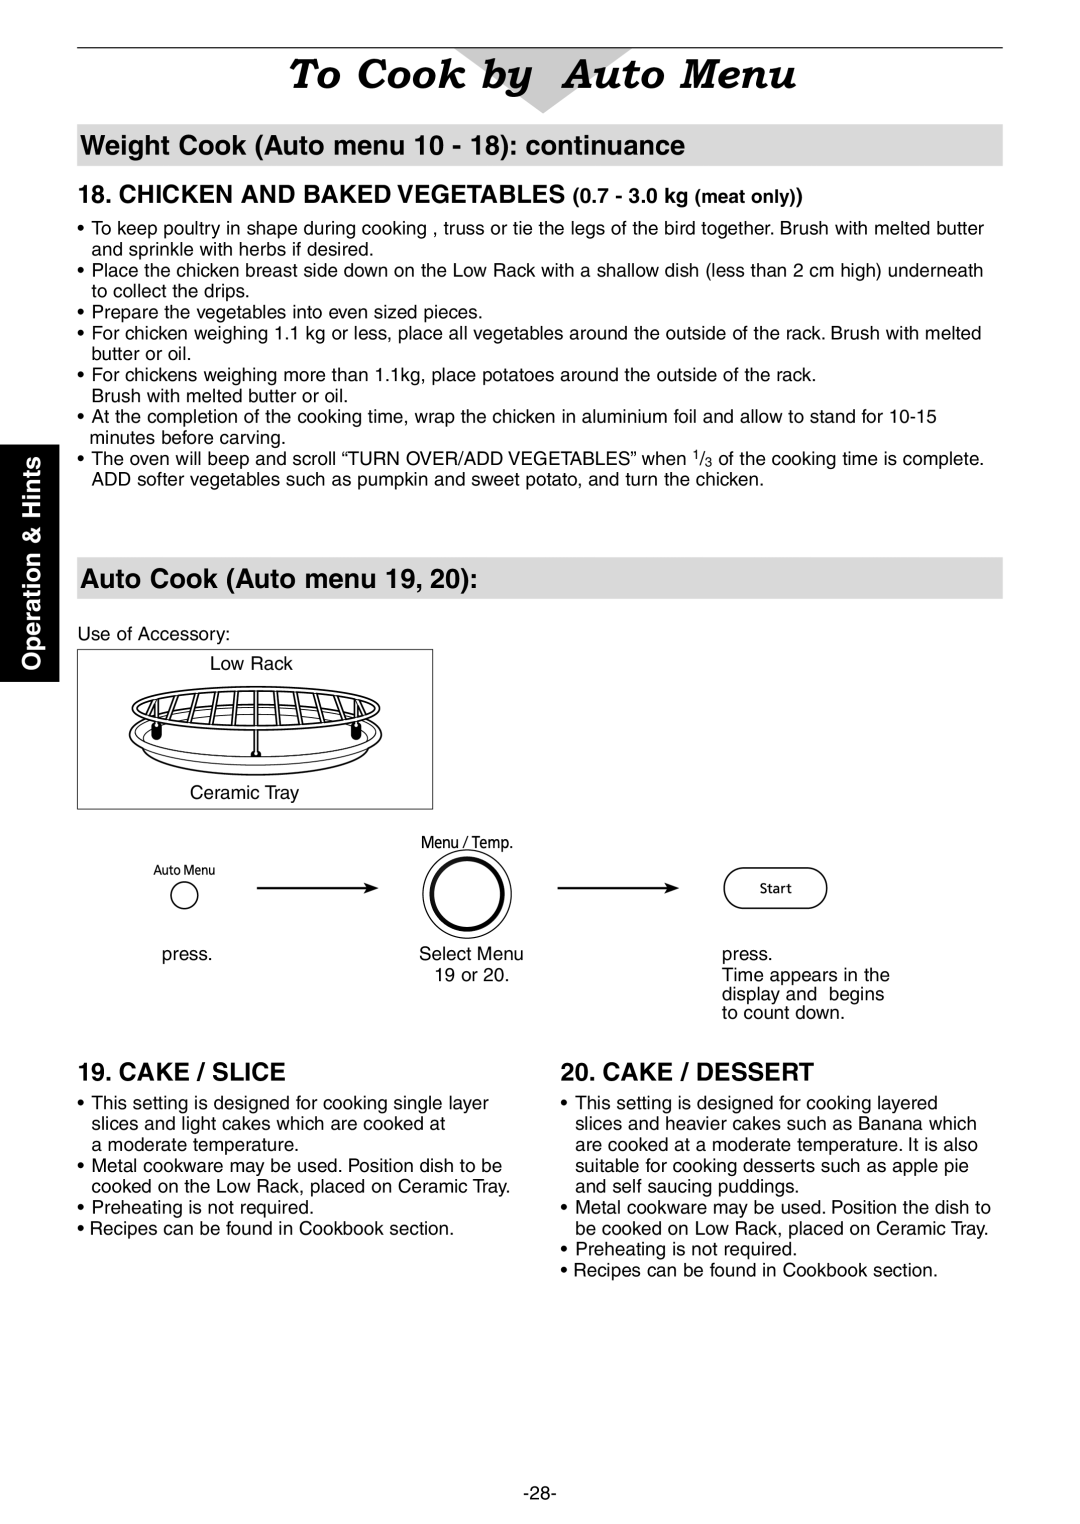 Panasonic NN-CD987W Weight Cook Auto menu 10 - 18 continuance, Auto Cook Auto menu, Cake / Slice, Cake / Dessert 